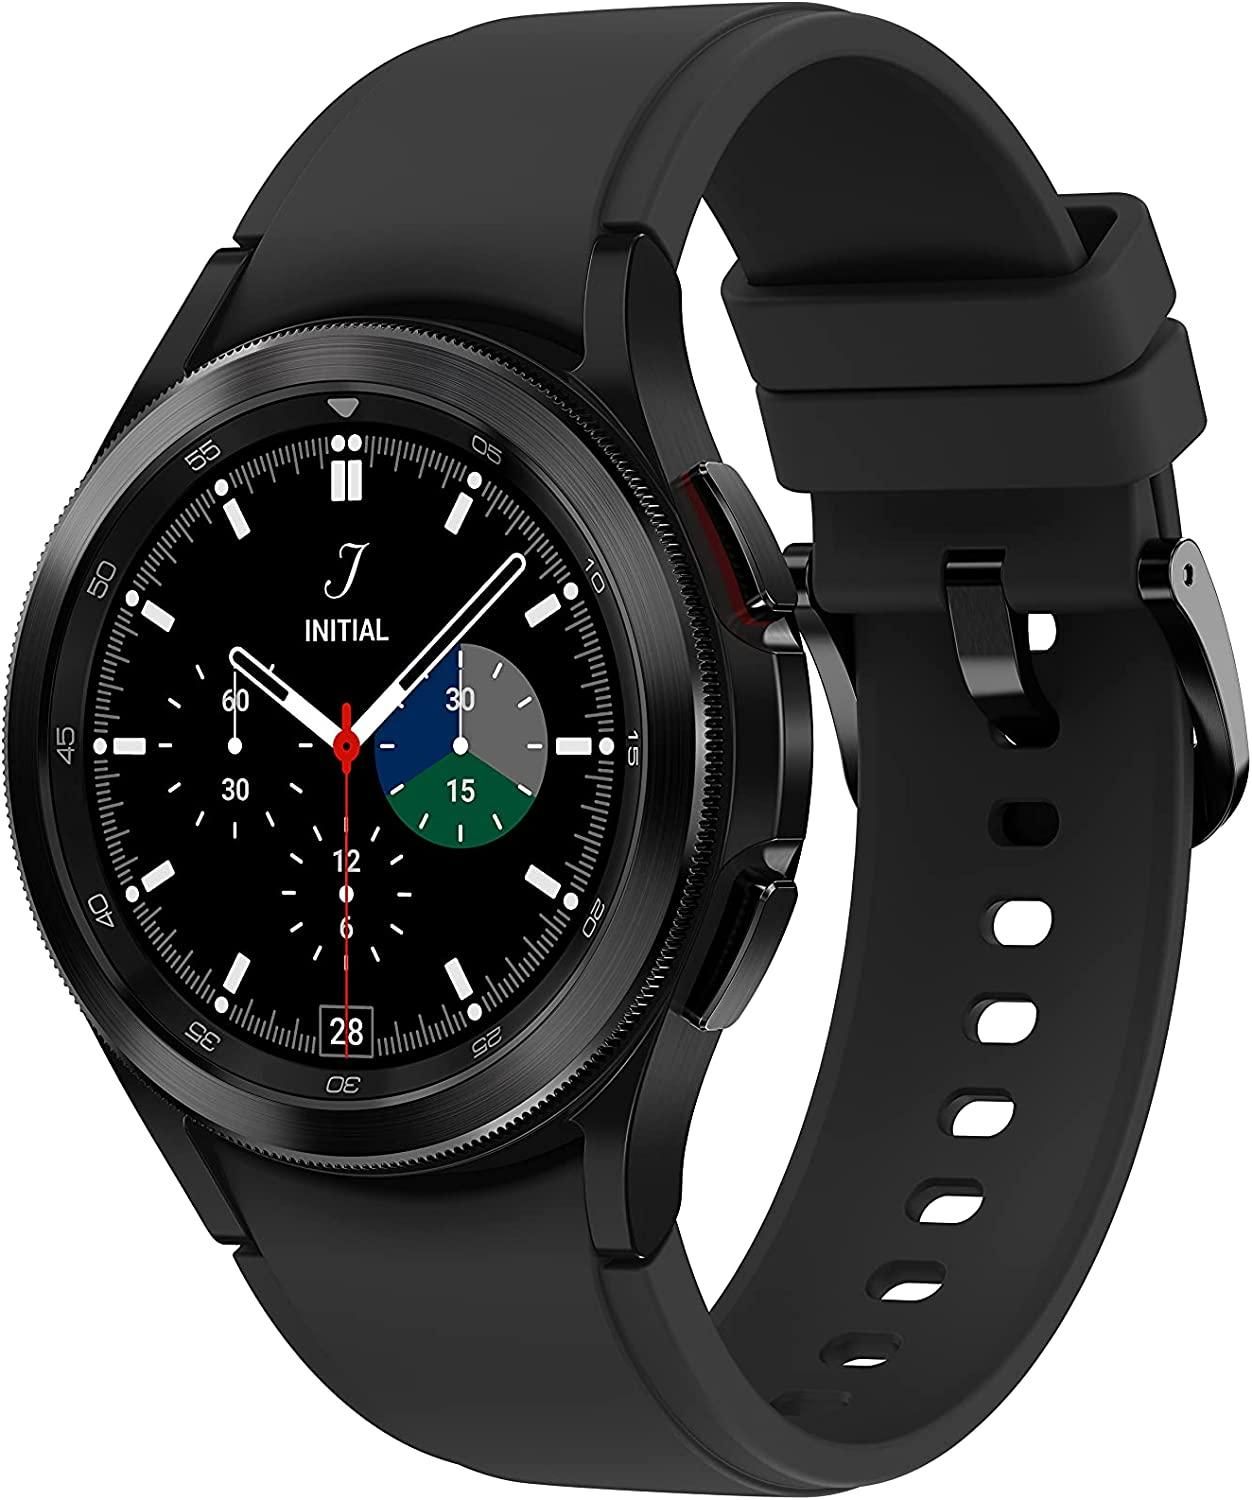 Samsung Galaxy Watch 4 Classic black product box image